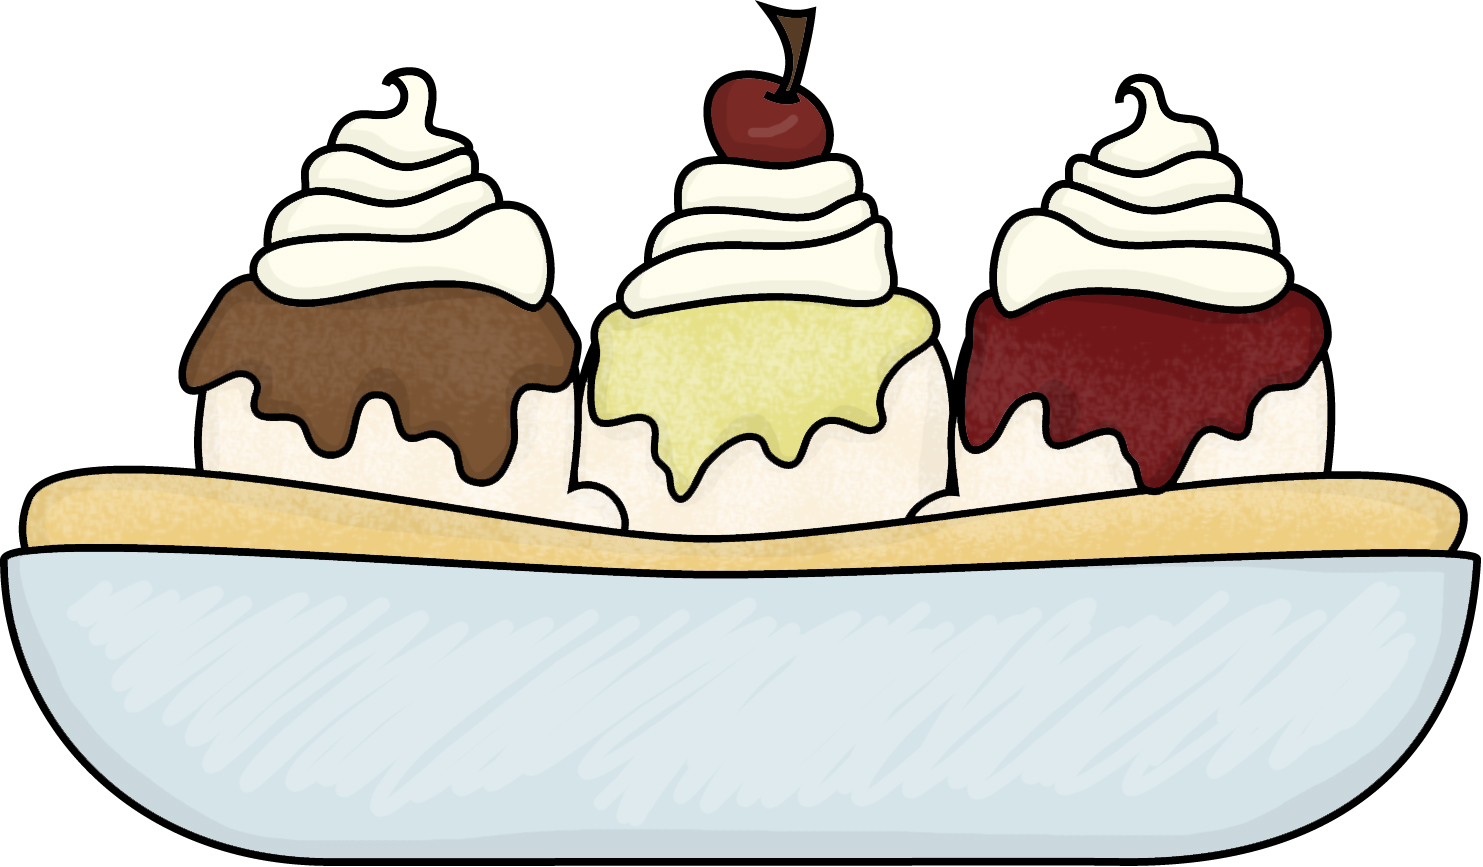 Sundae clipart dessert. Free ice cream download